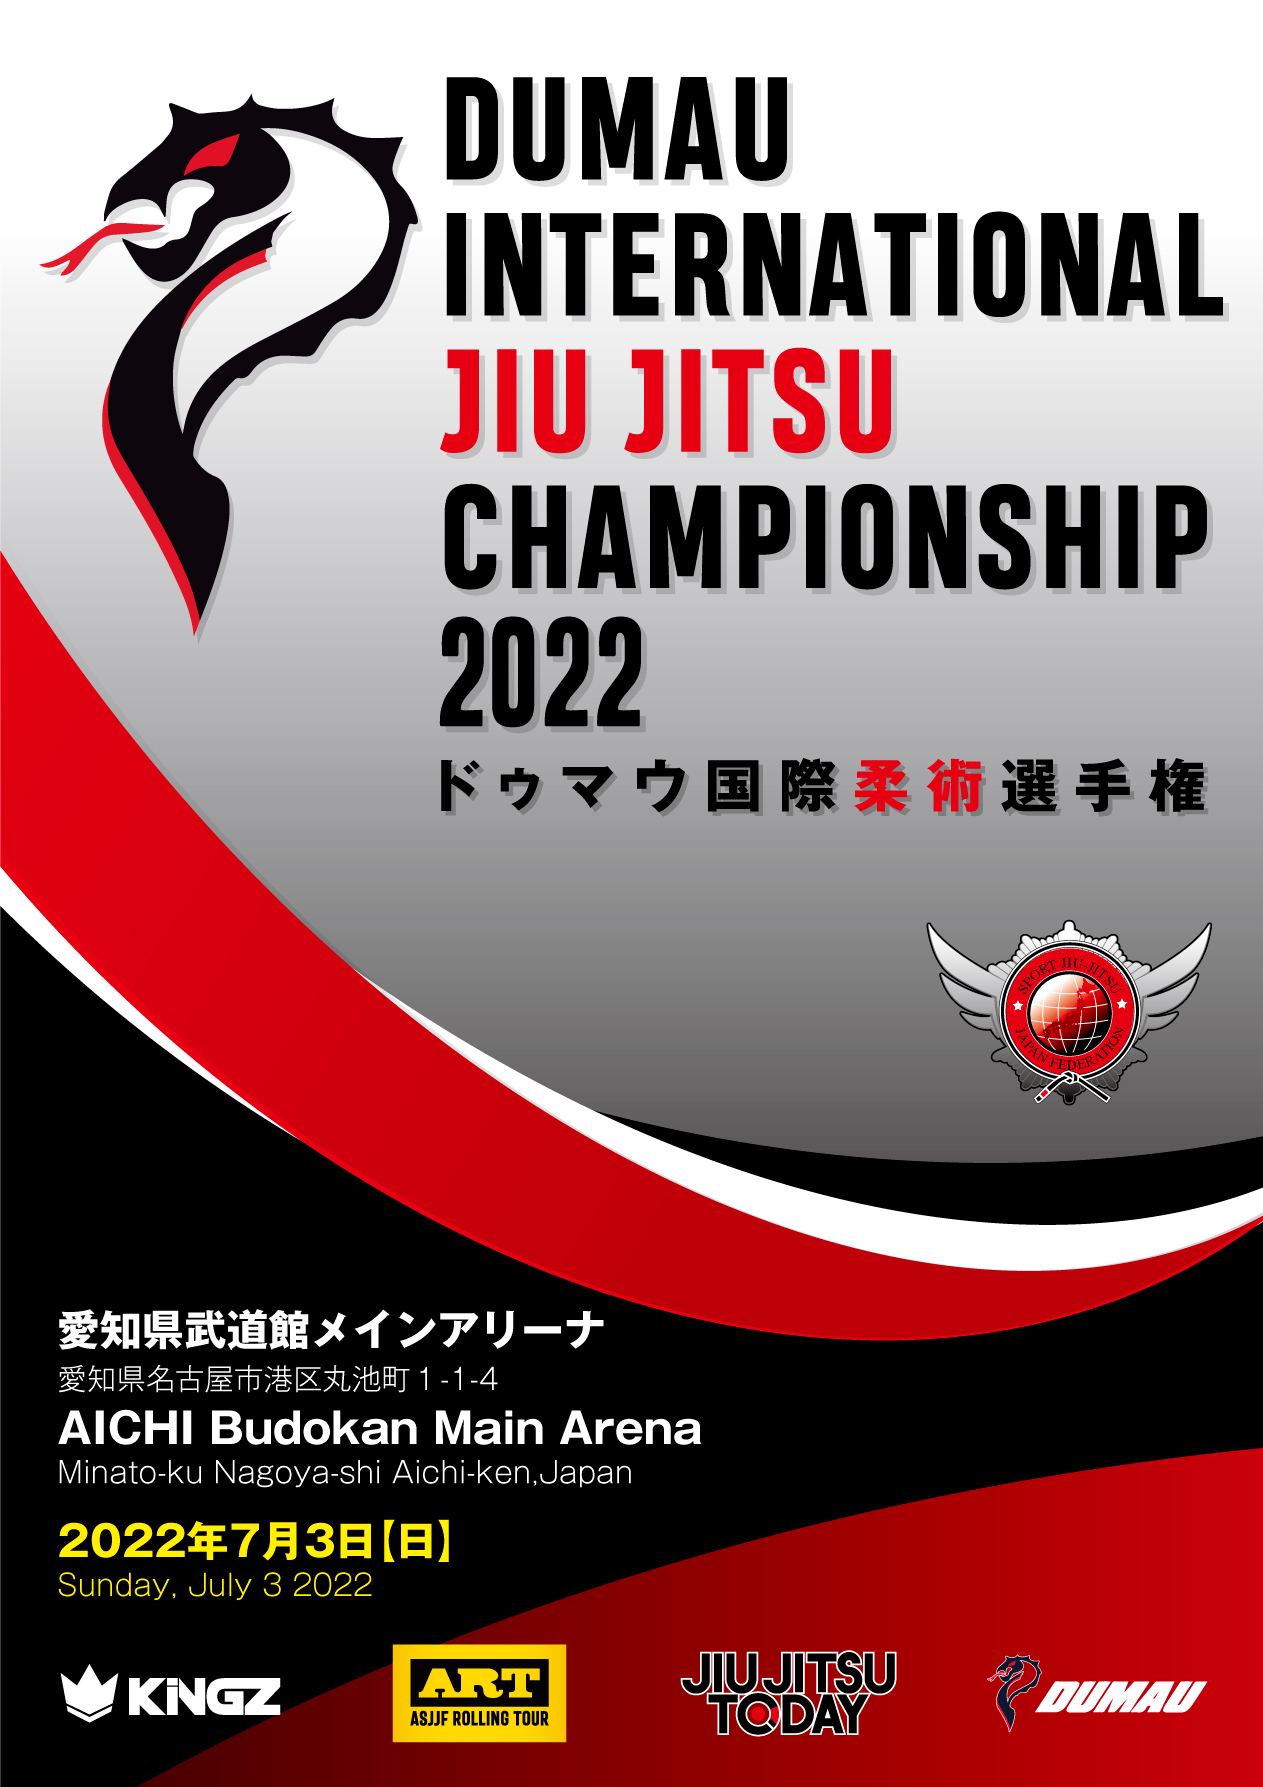 Dumau international jiu jitsu championship 2022 (In Central Japan)